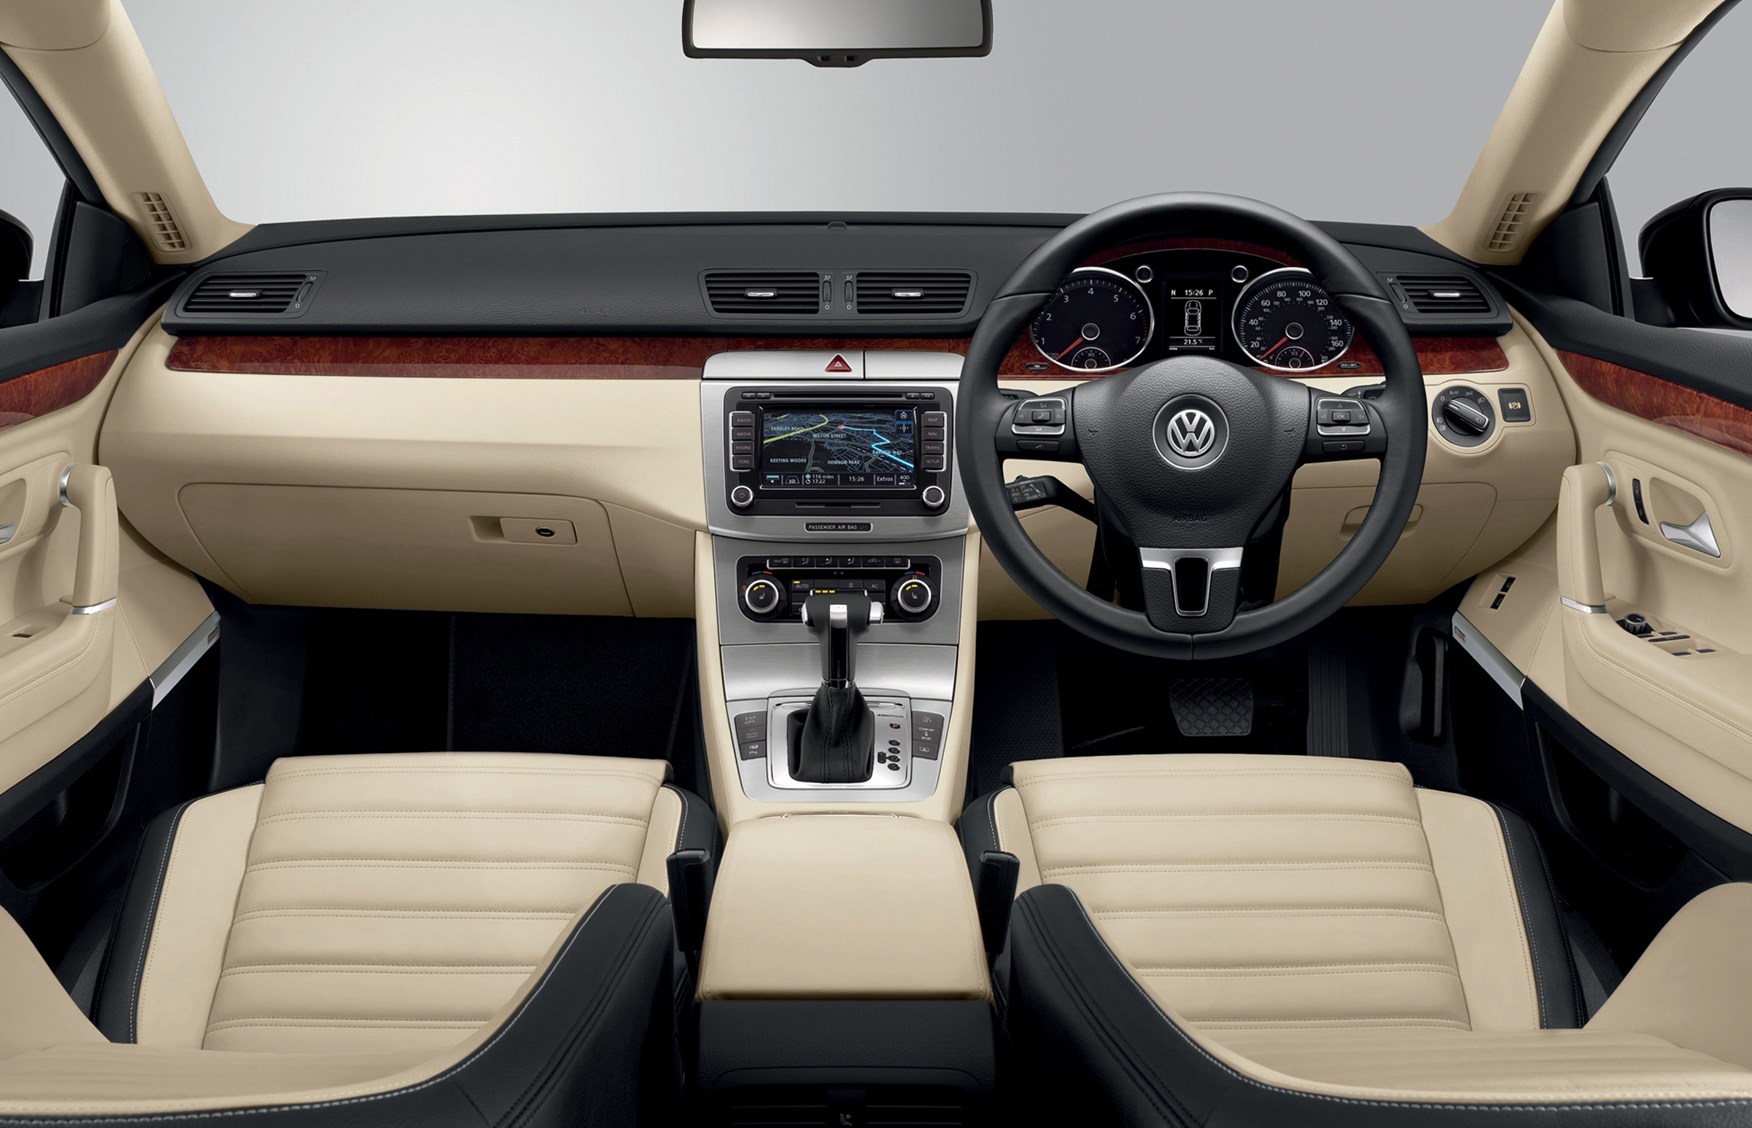 Салон сс. VW Passat b6 Interior. Фольксваген Пассат СС салон. Volkswagen Passat cc салон. Фольксваген Пассат 2008 салон.